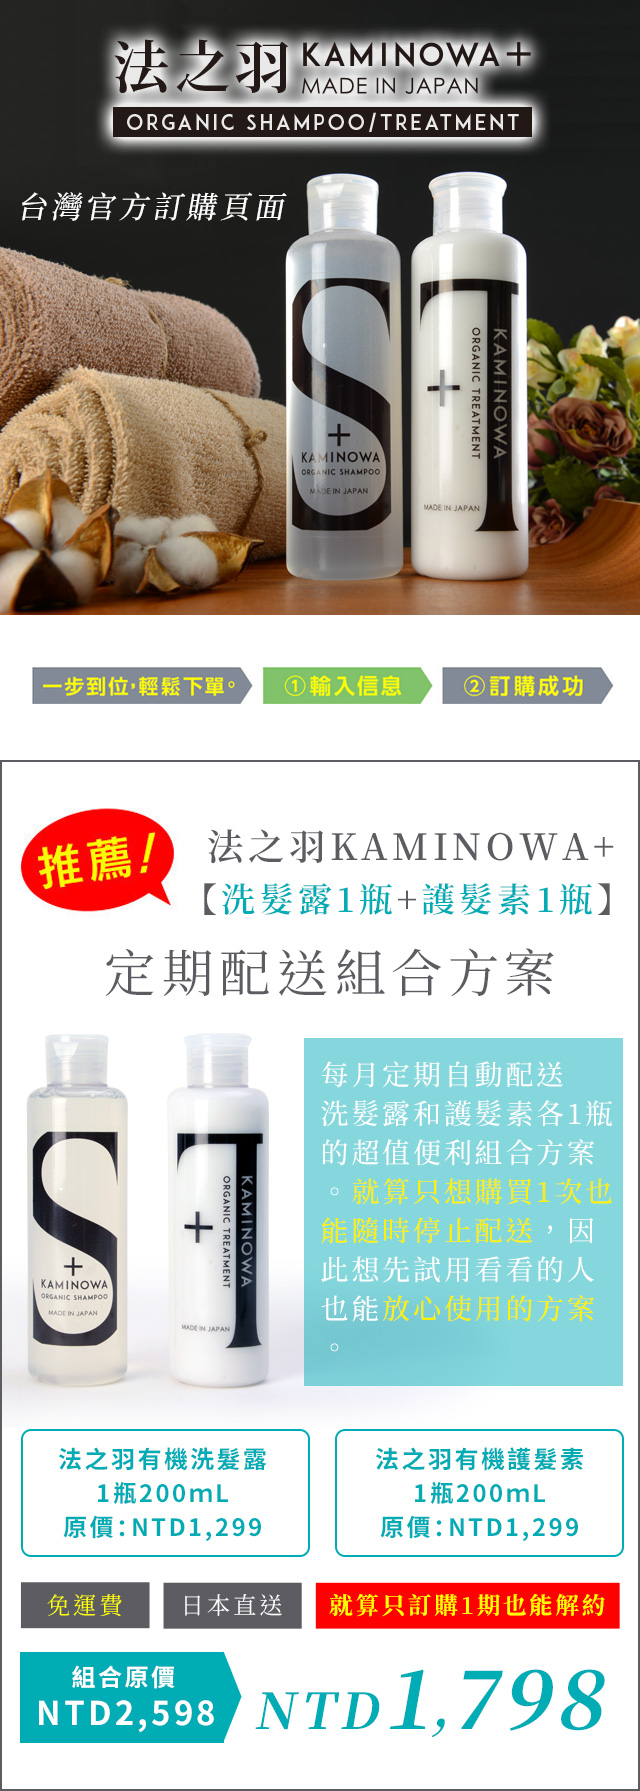 官方訂購頁面 法之羽 KAMINOWA 洗髮露・護髮素 MADE IN JAPAN